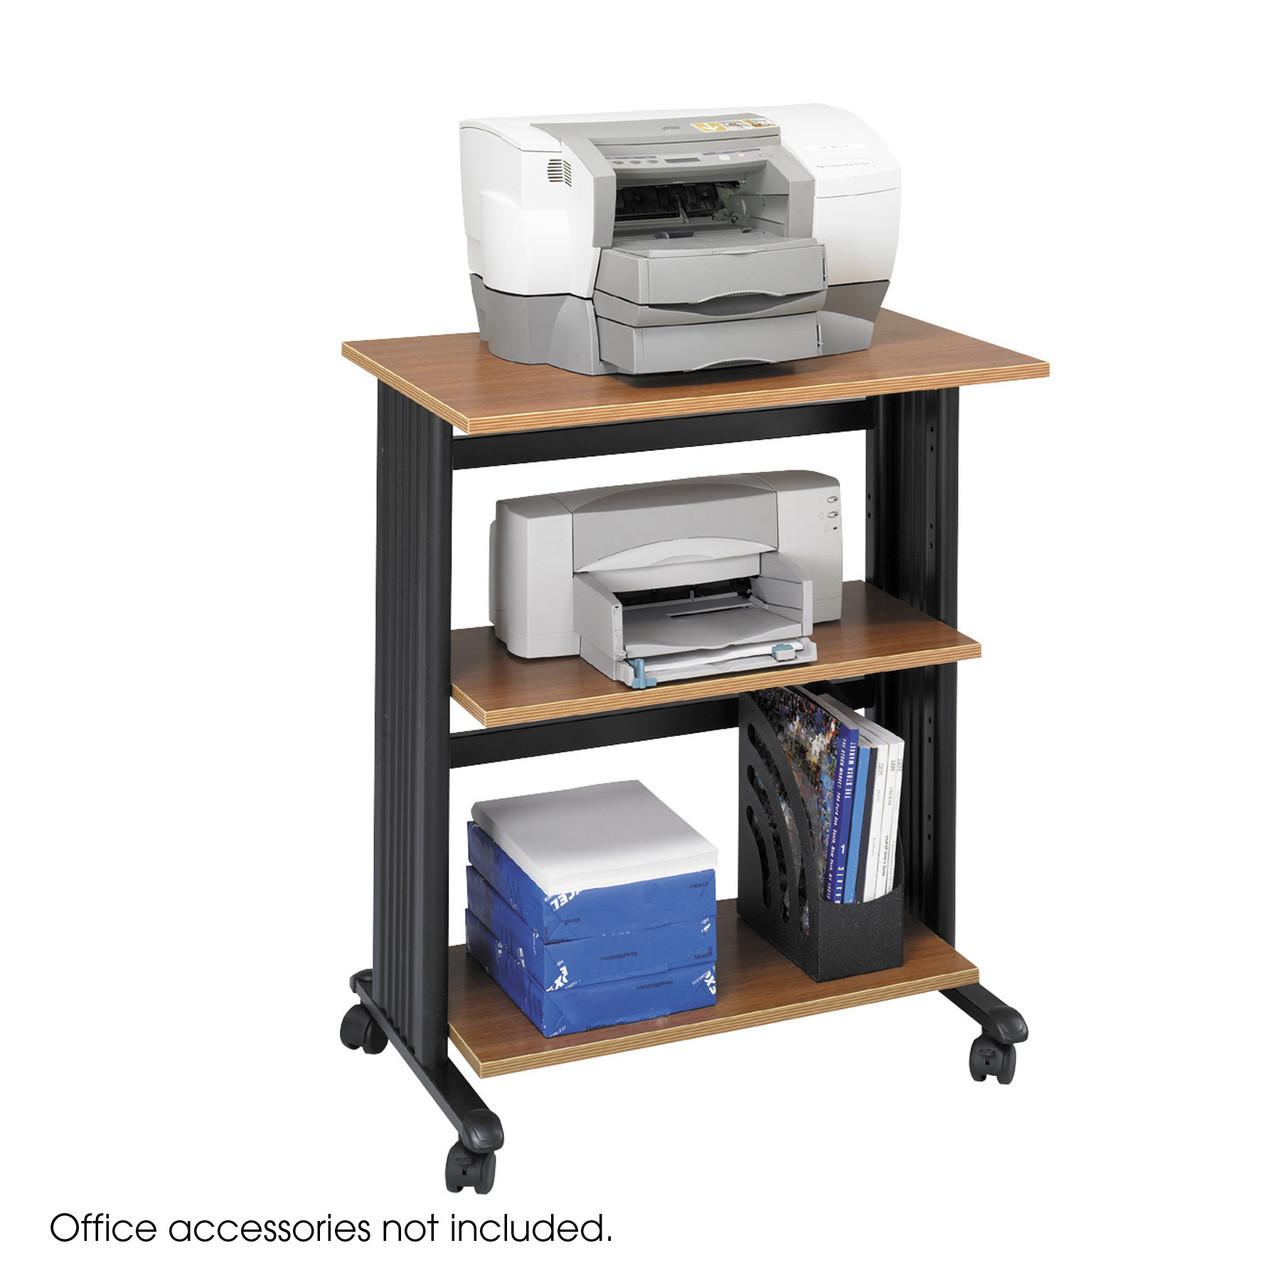 Muv Three Level Adjustable Printer Stand